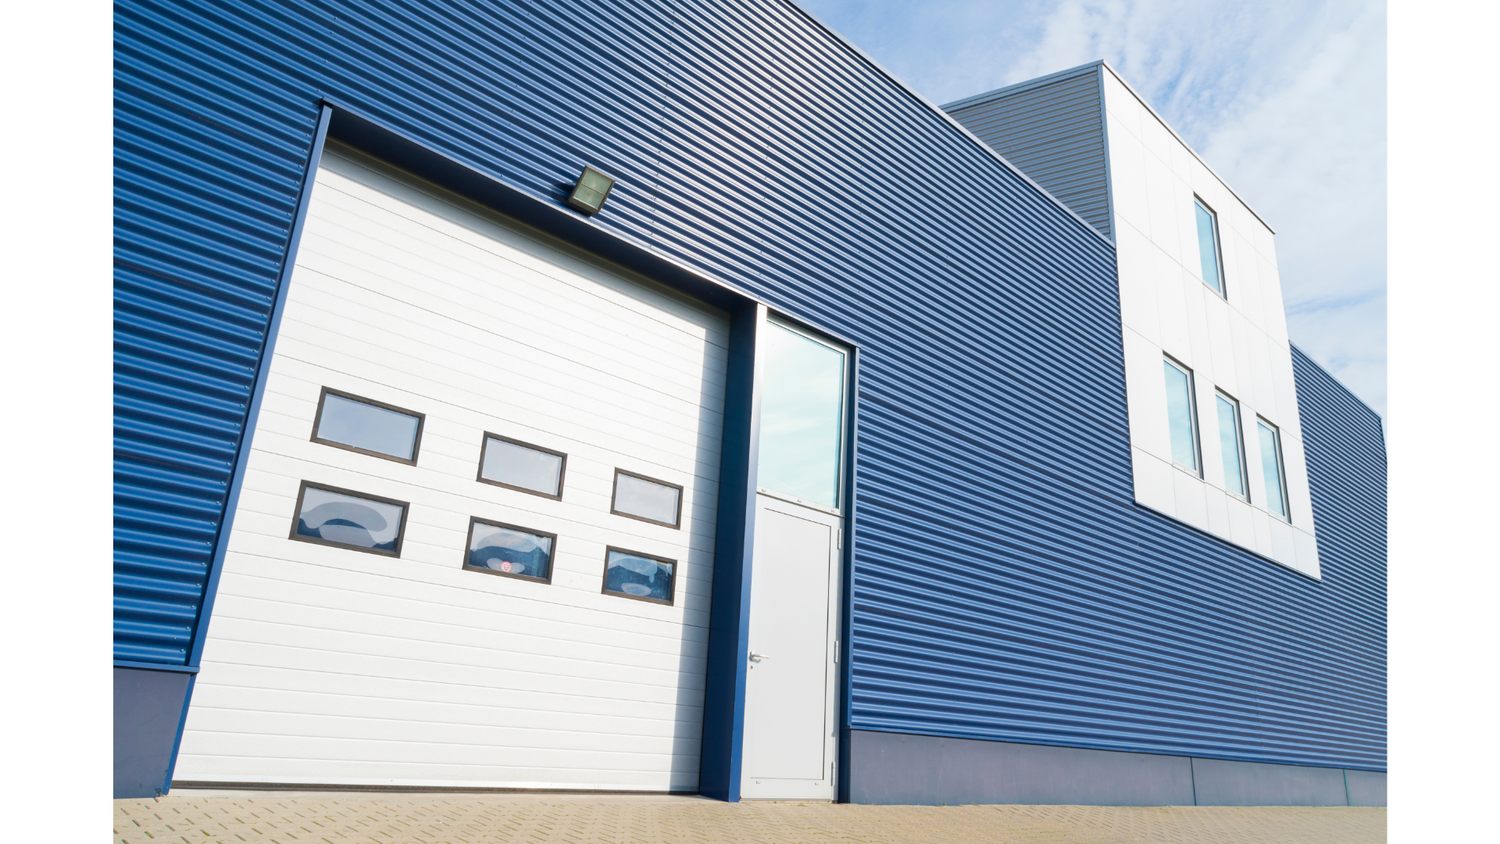 Warehouse exterior, blue with white garage door